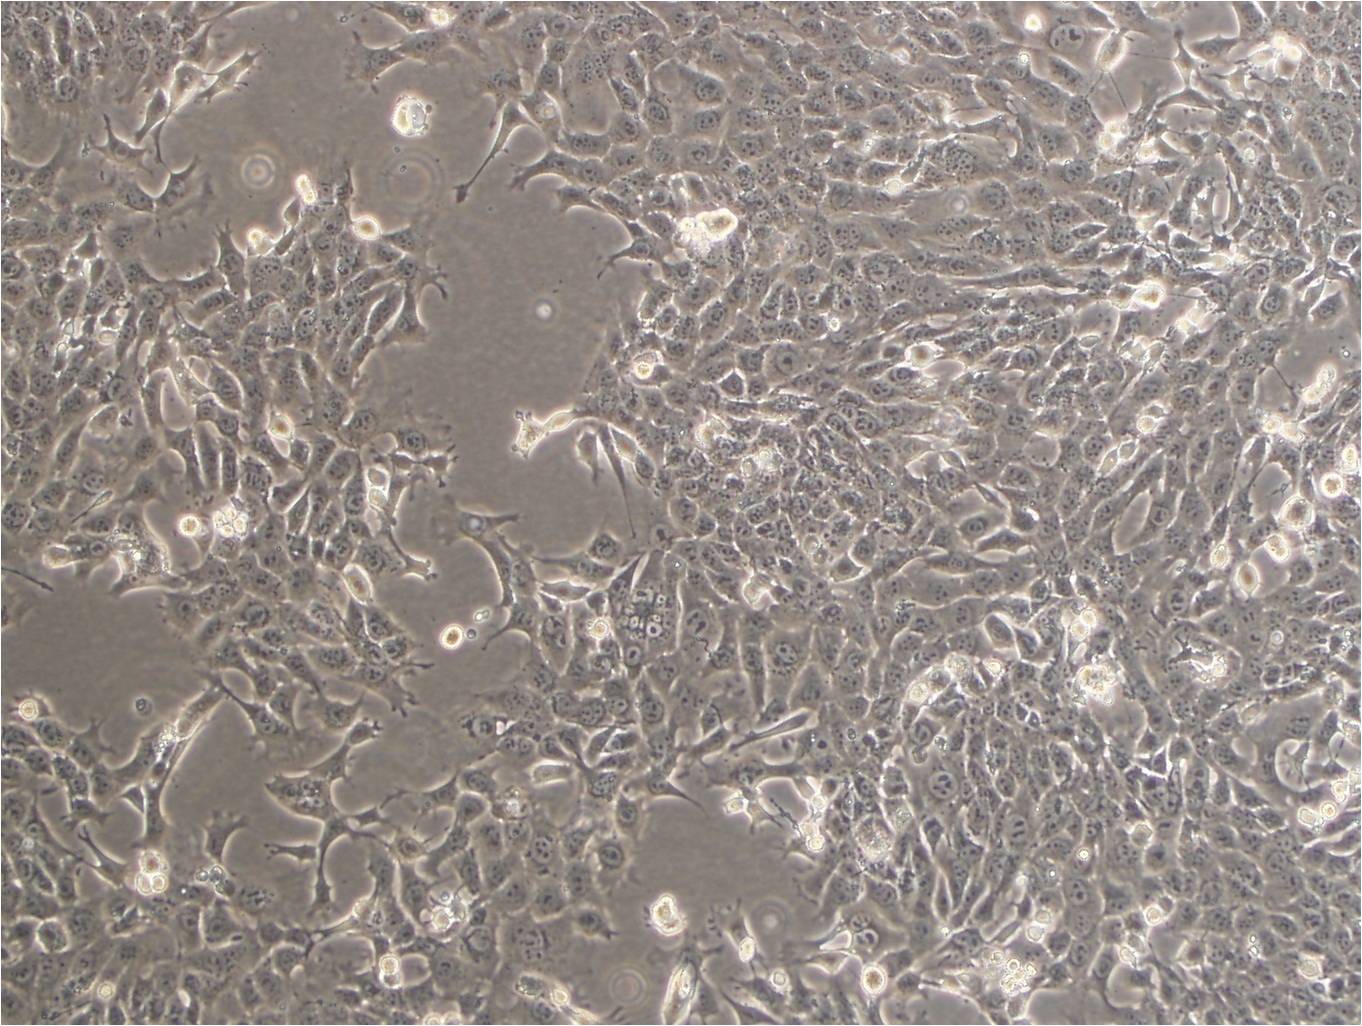 PC-10 epithelioid cells人肺鳞癌细胞系,PC-10 epithelioid cells